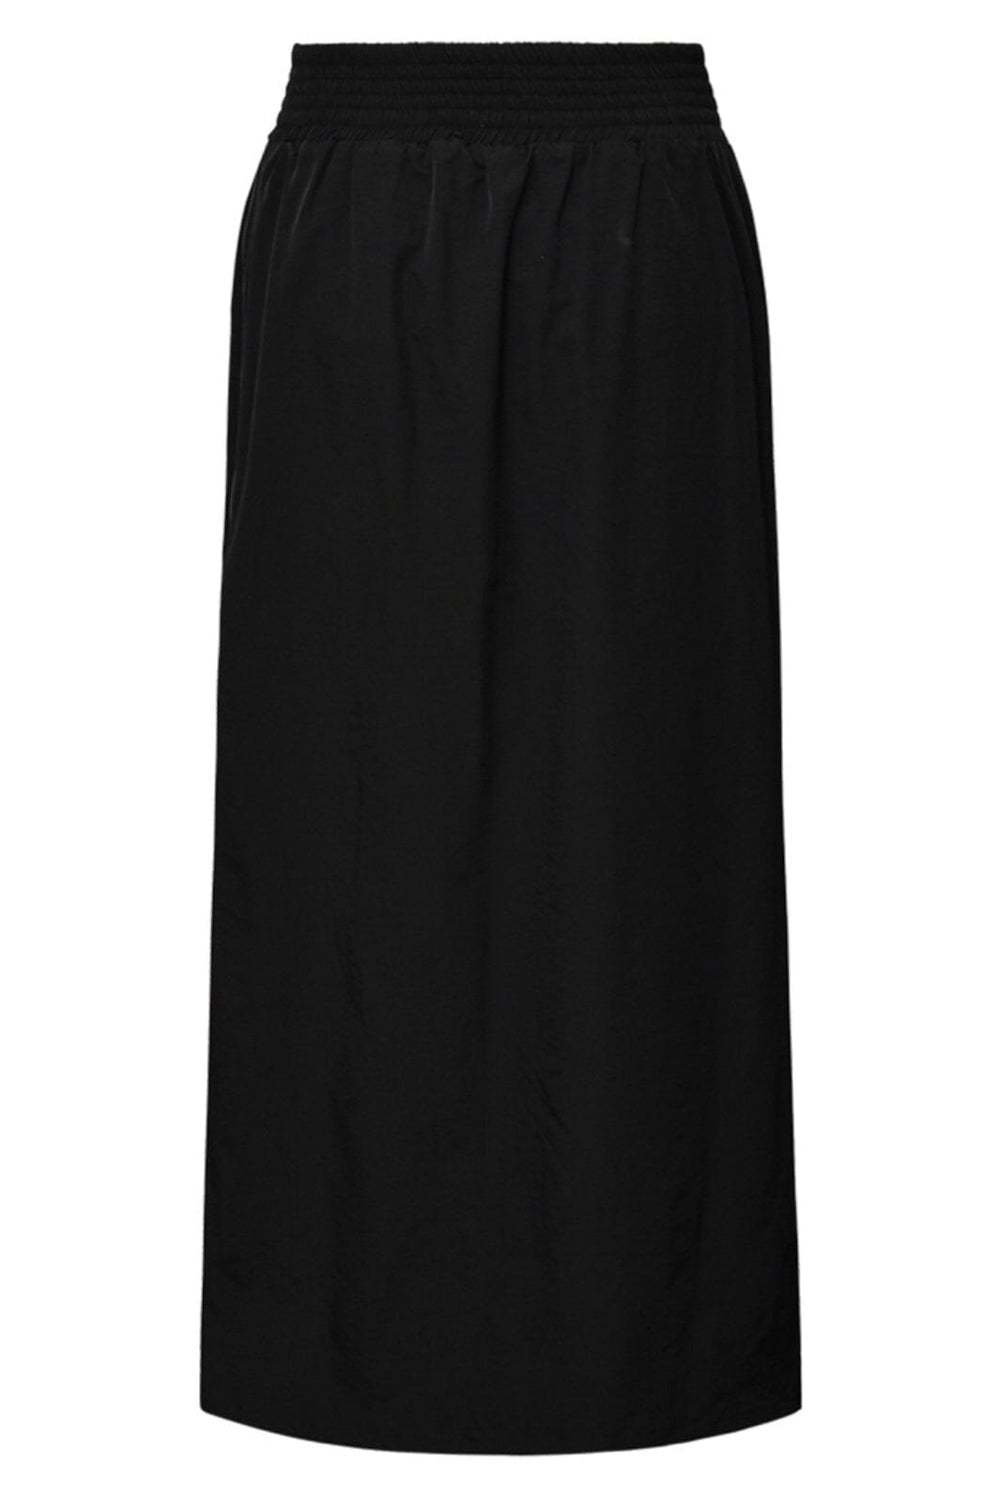 Gossia - PearlGO Skirt - Black Nederdele 